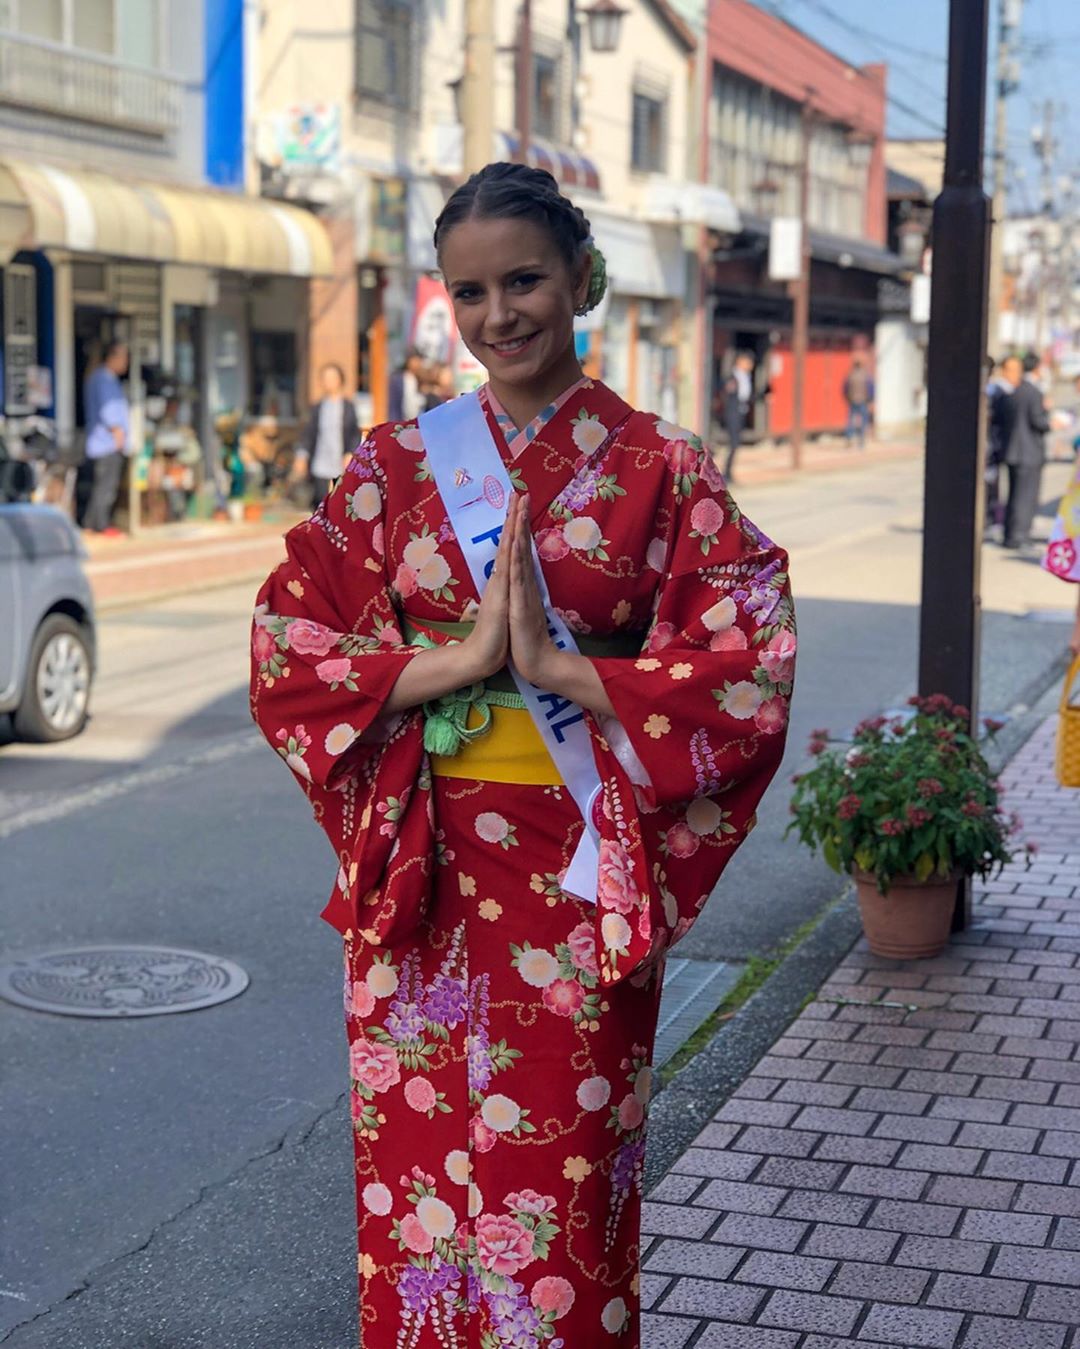 candidatas a miss international 2019 usando tradicional traje tipico japones. N4jmtrf6